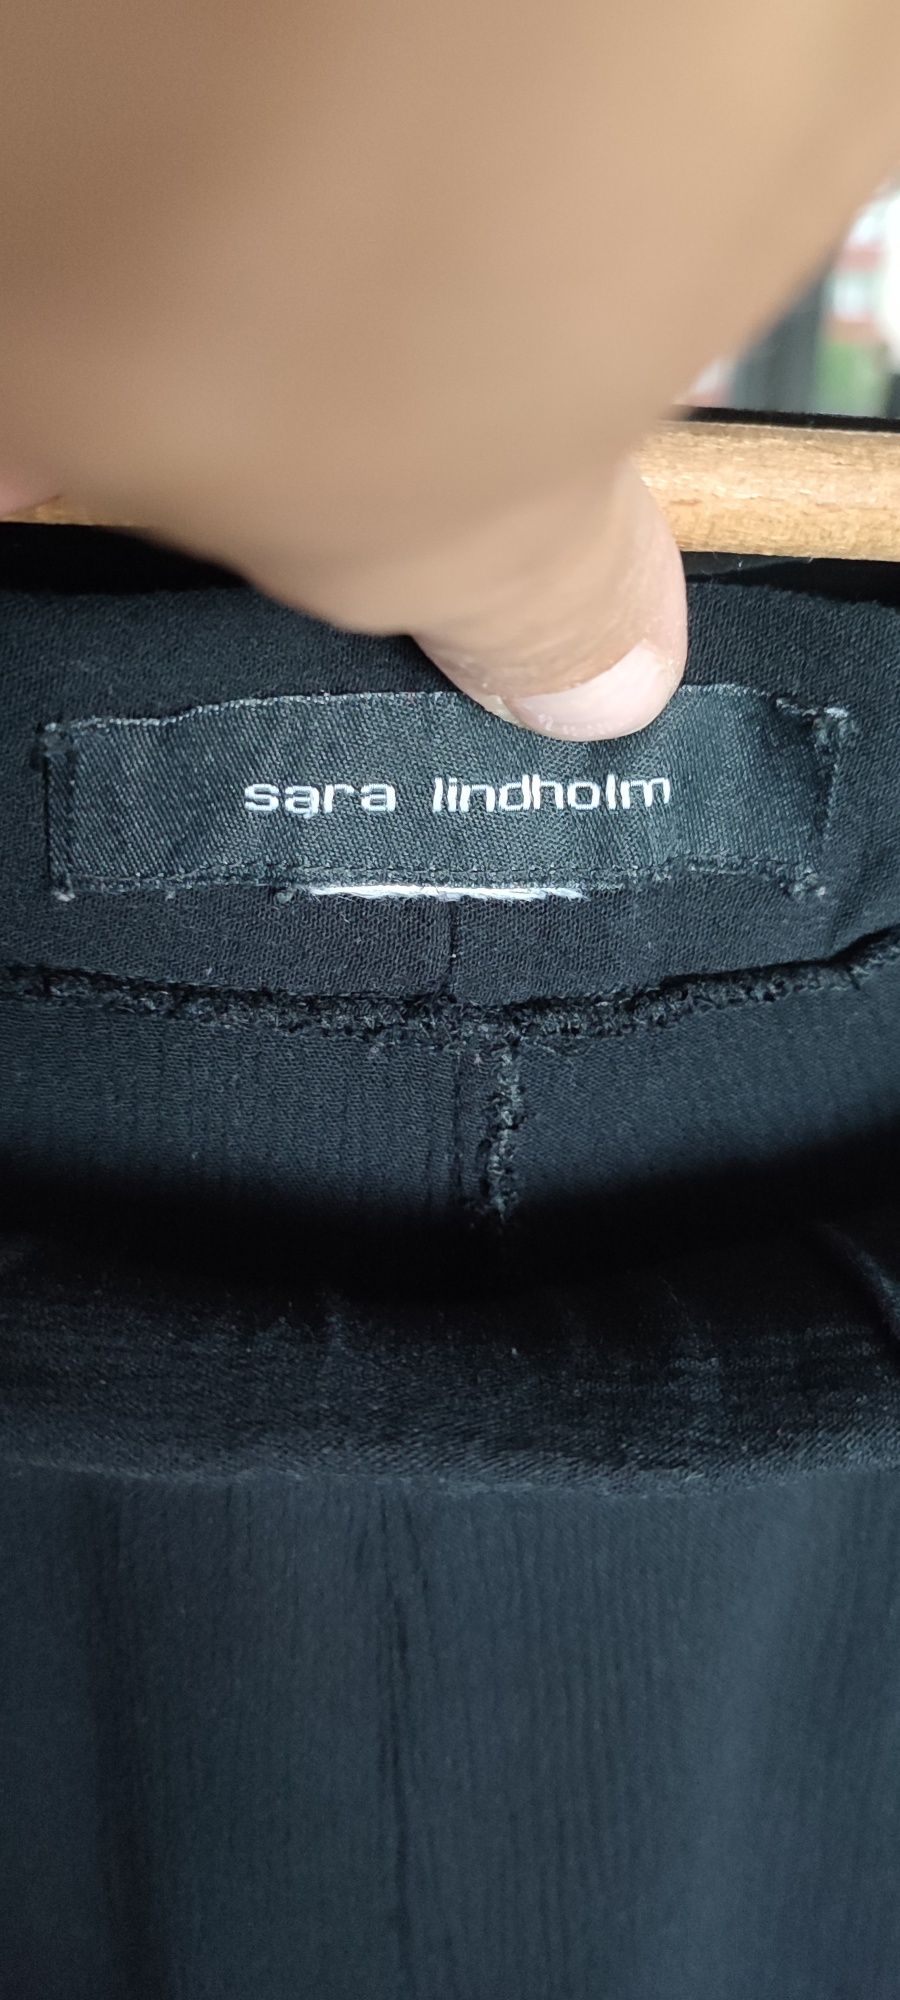 Sara indholm letnie cienkie spodnie z koronką XL